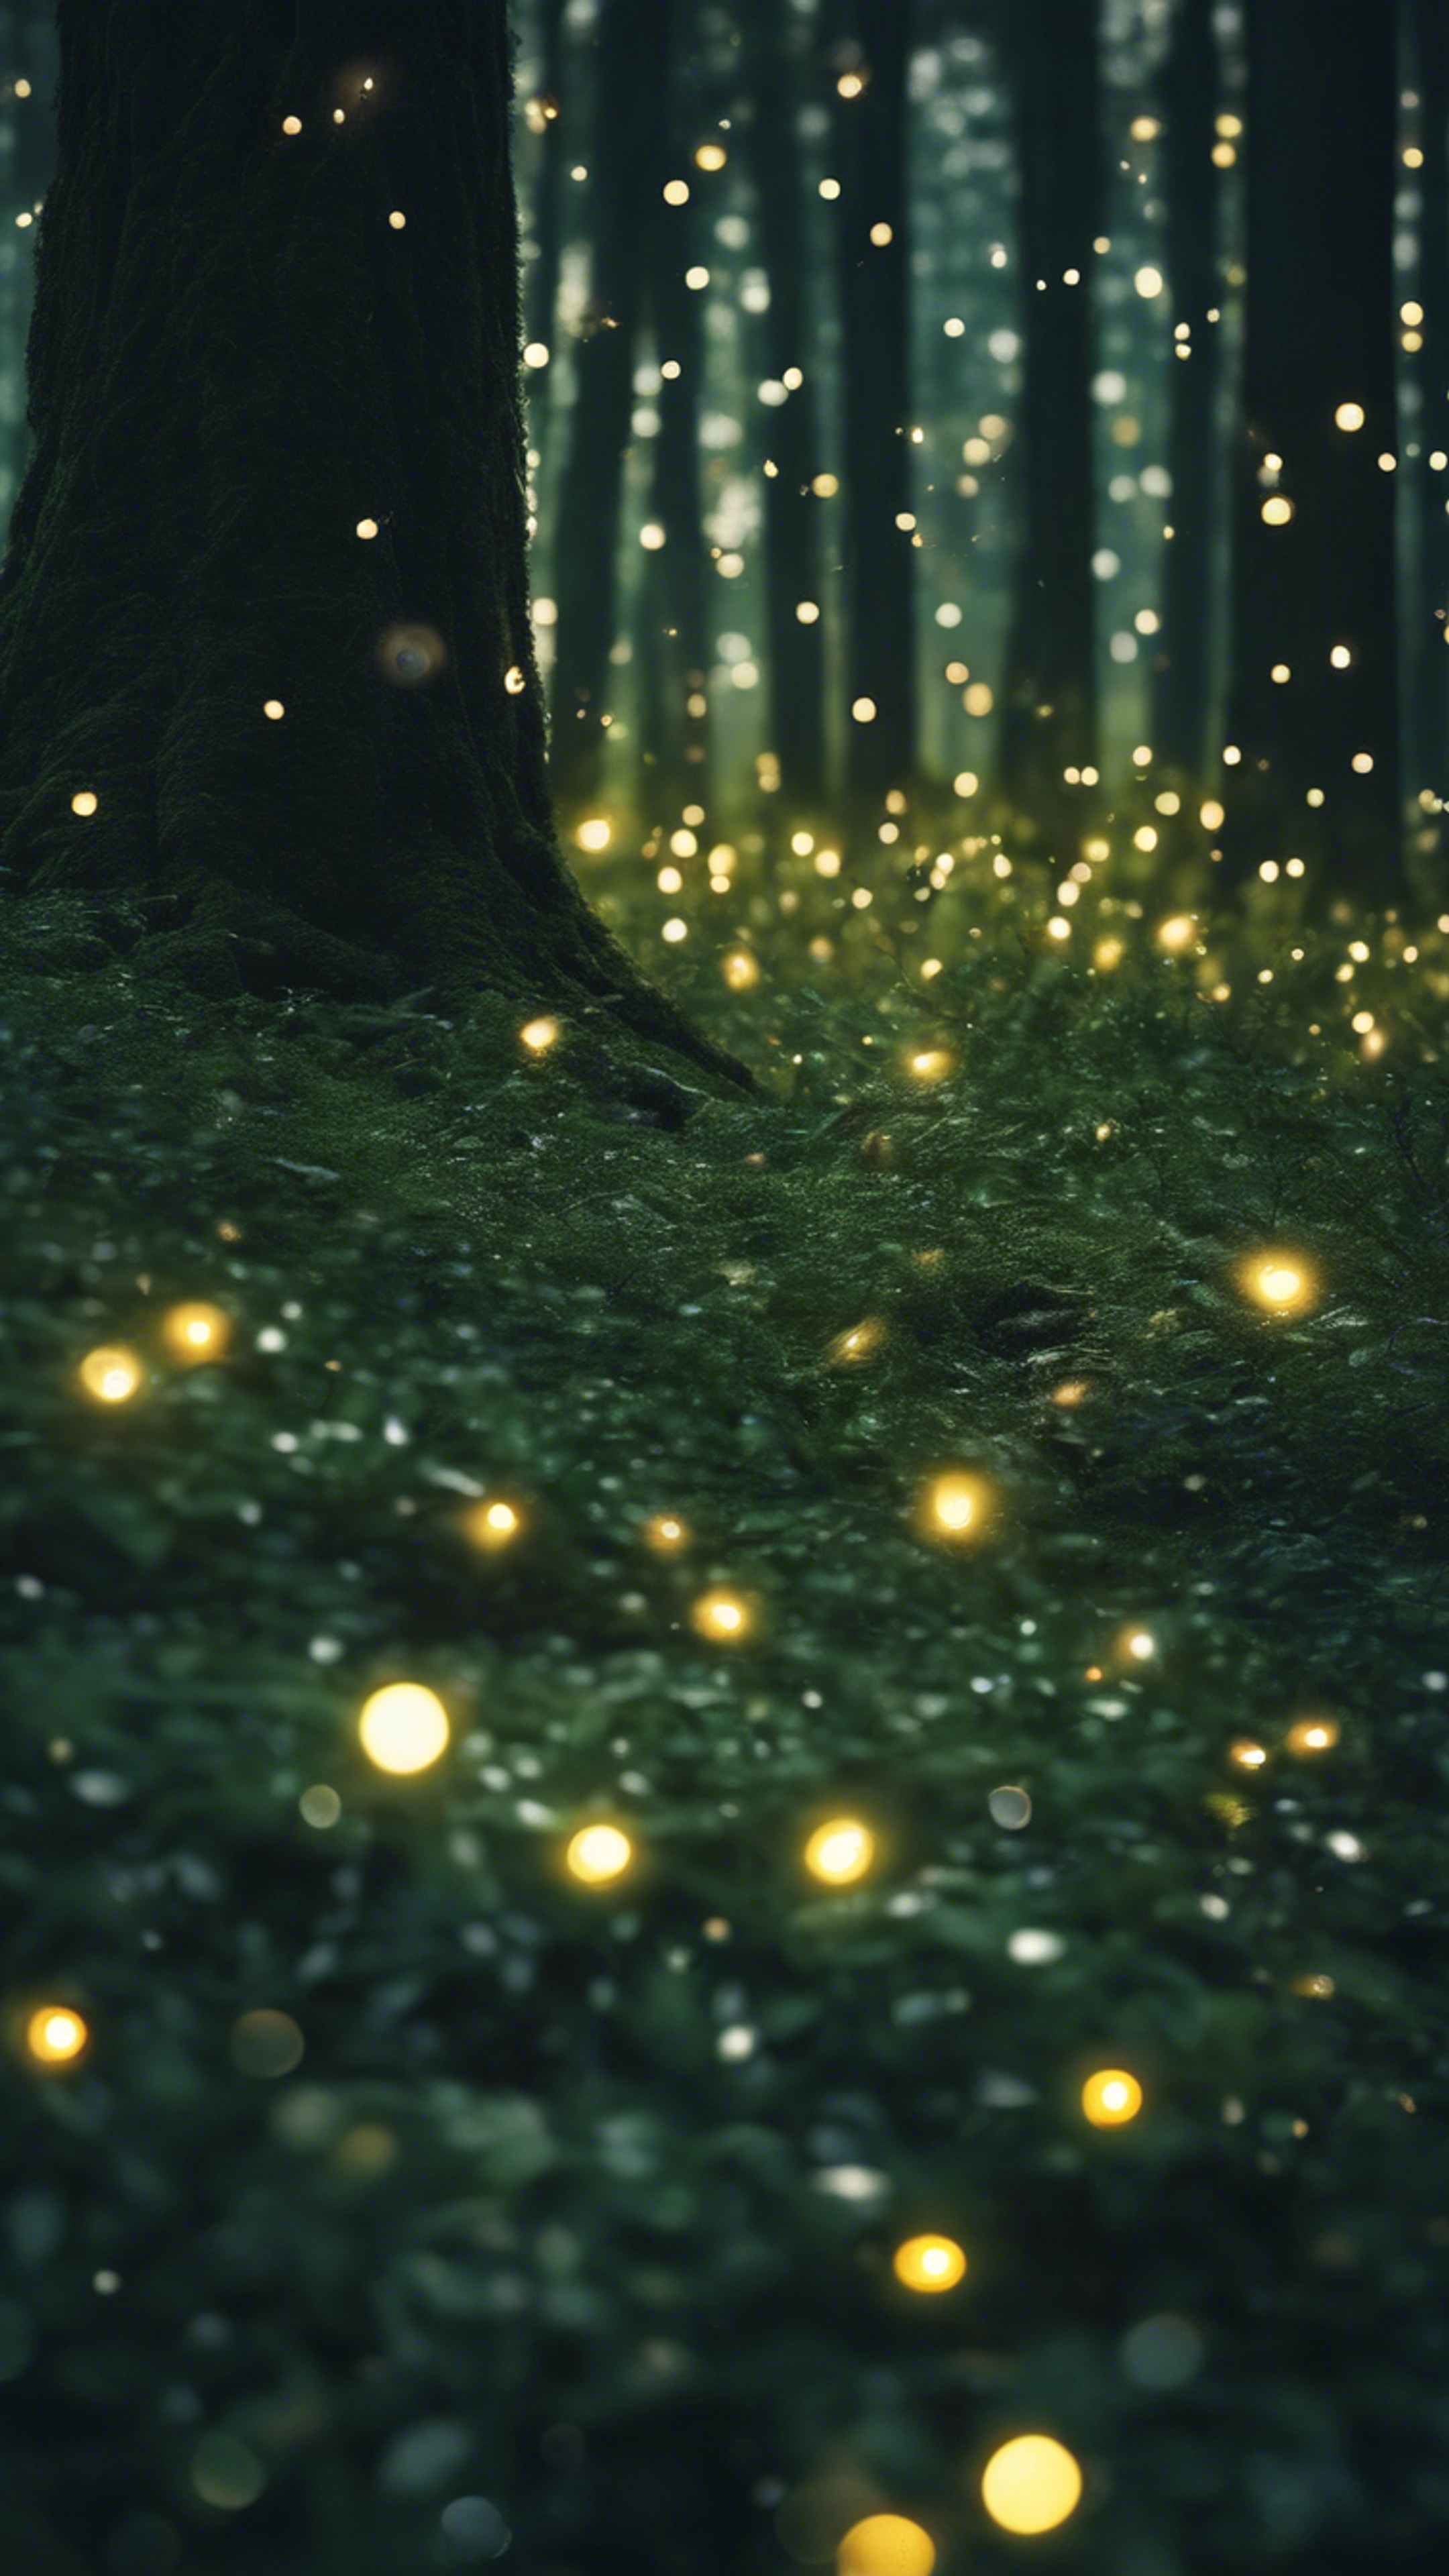 A dark green forest in the twilights, flecked with shimmering fireflies. 벽지[48f2b28e2b5742fcbebf]